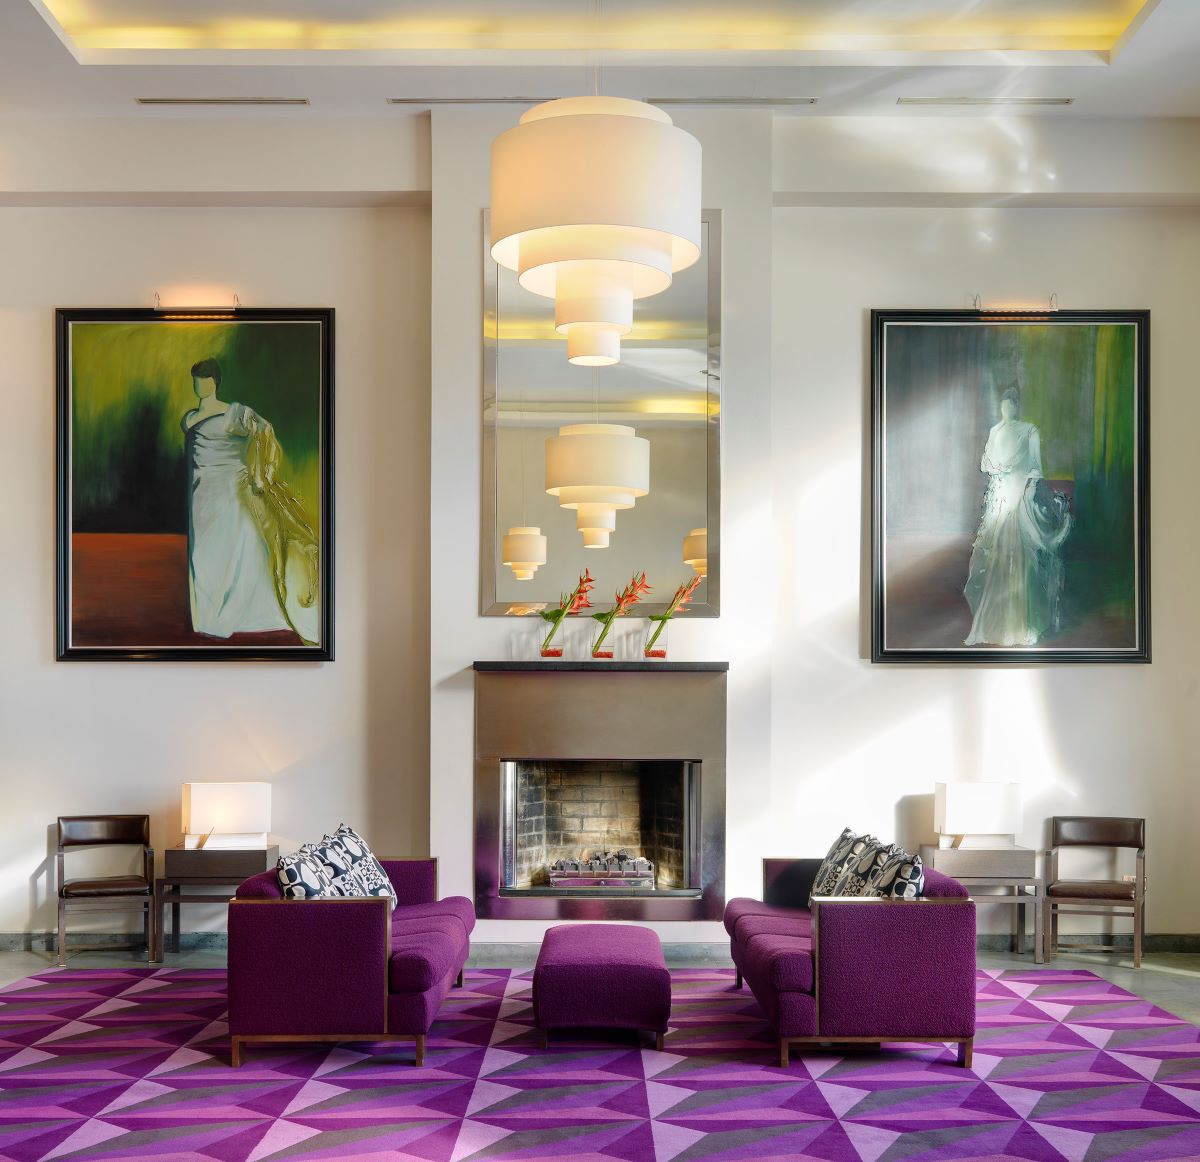 The purple lobby of the Fitzwilliam Hotel in Dublin.